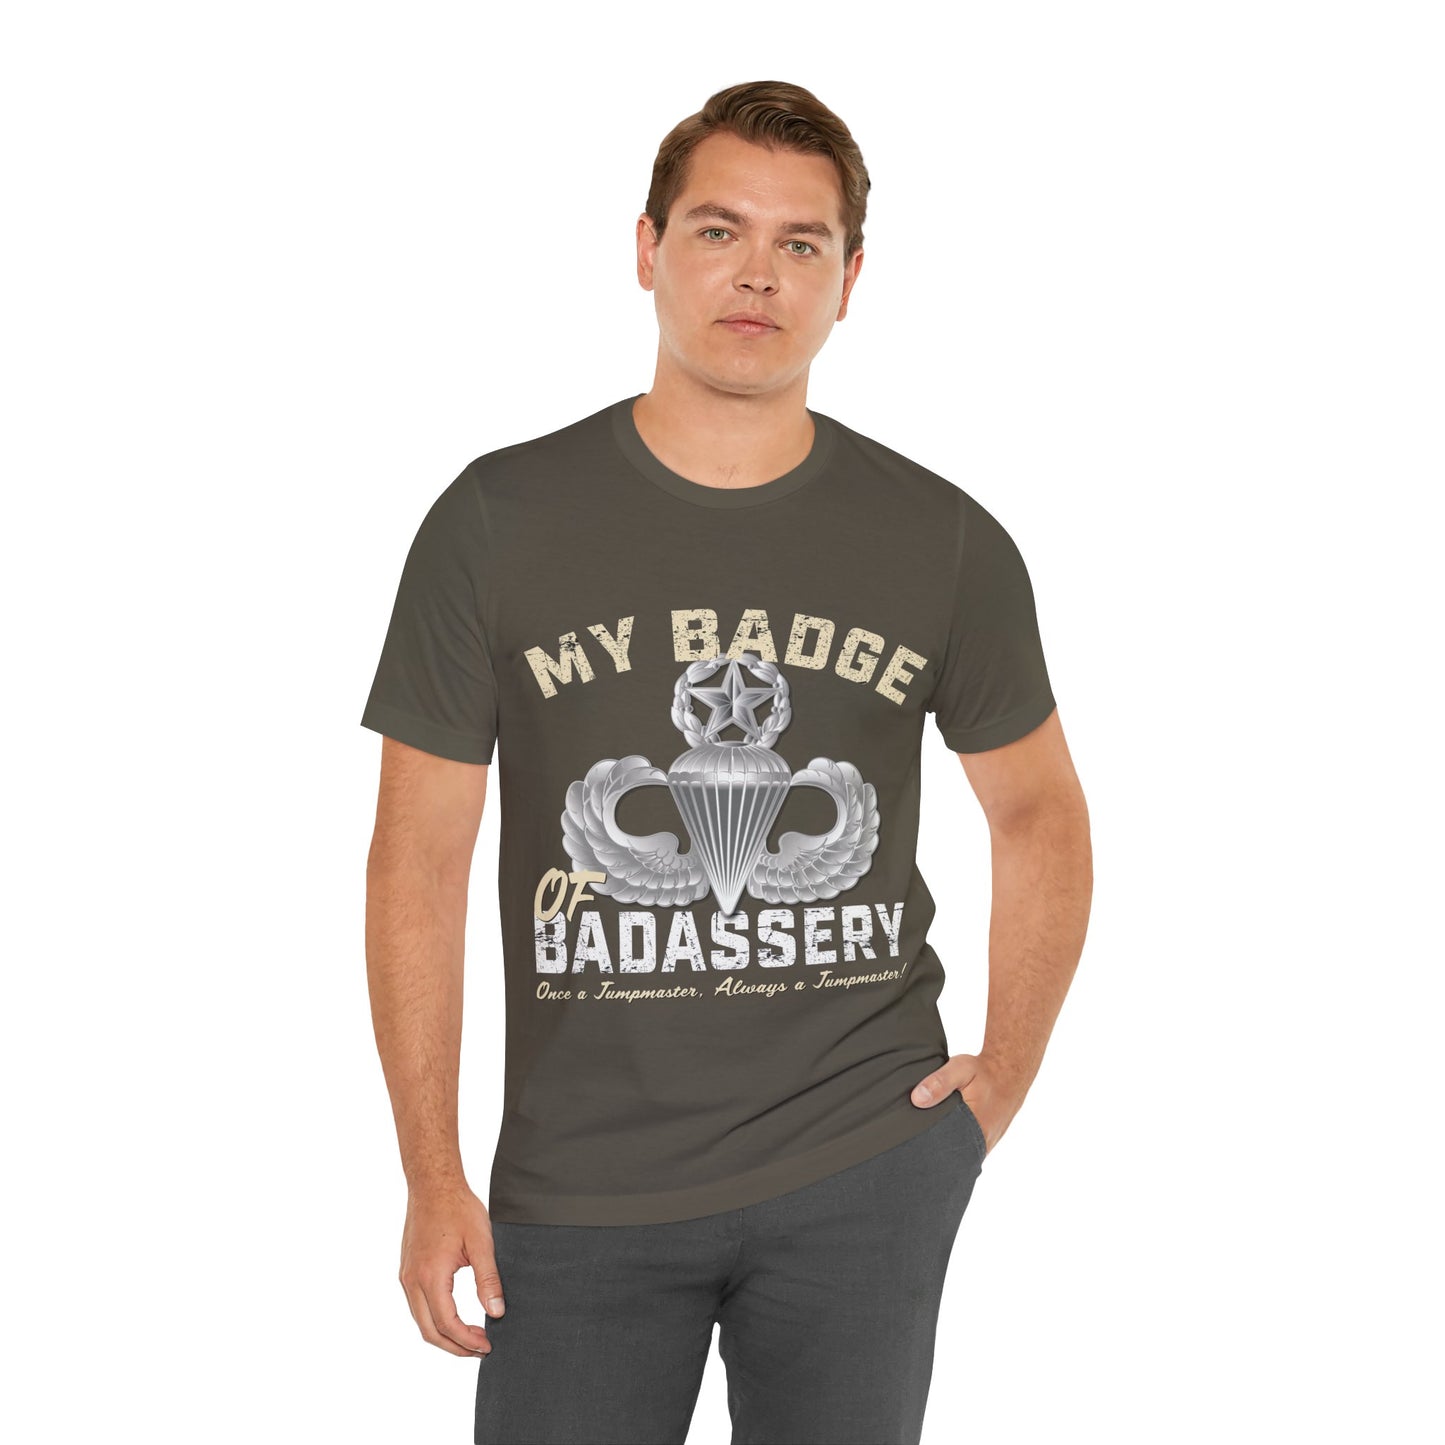 Jumpmaster Badassery T-Shirt